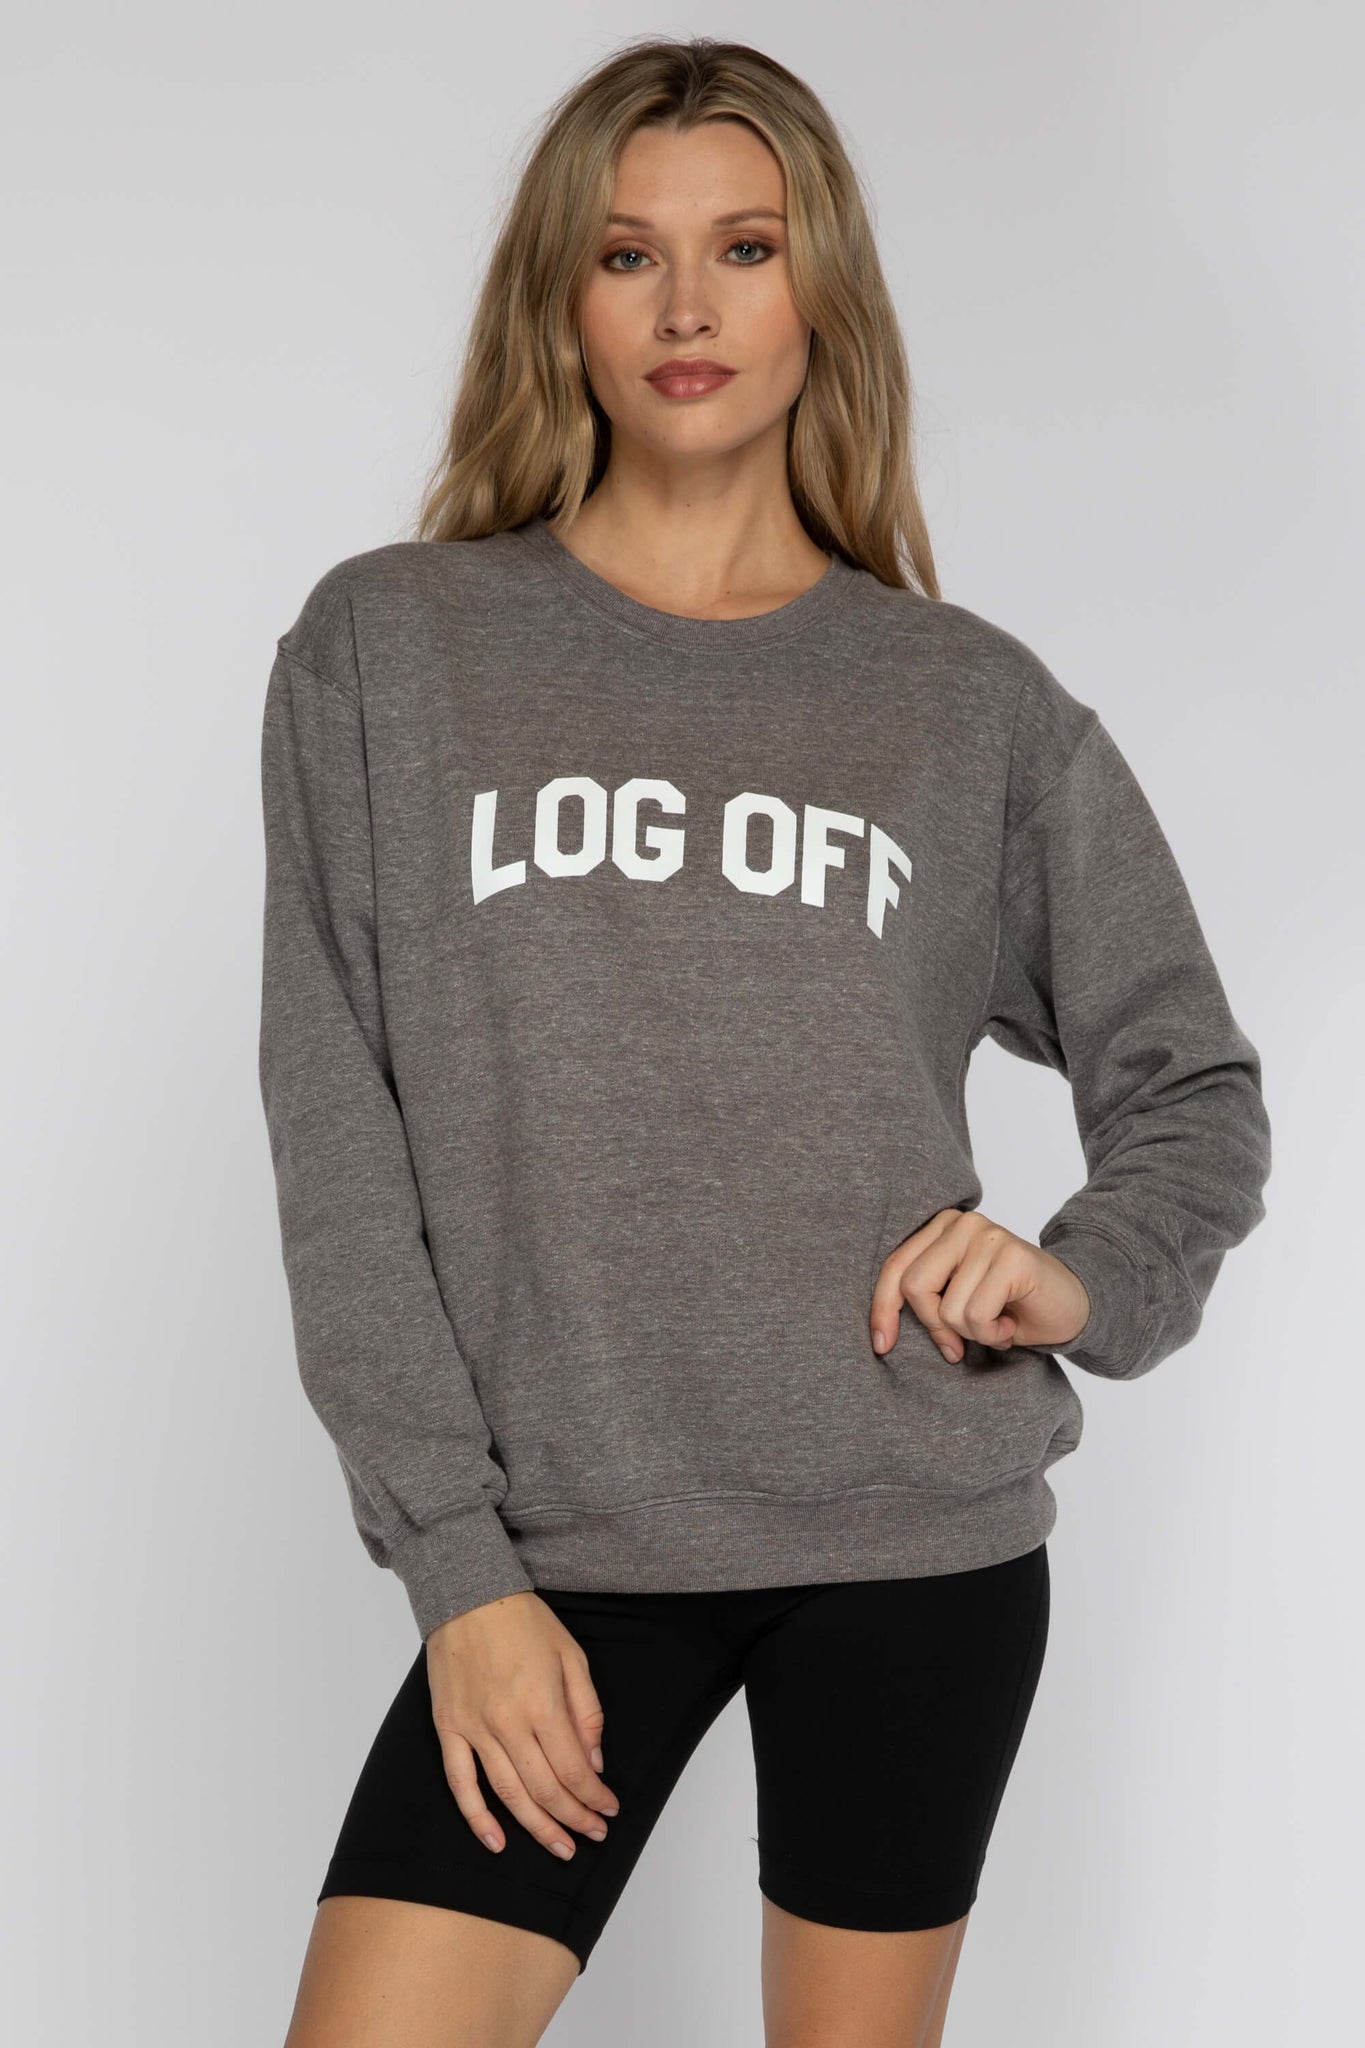 Log Off Sweatshirt